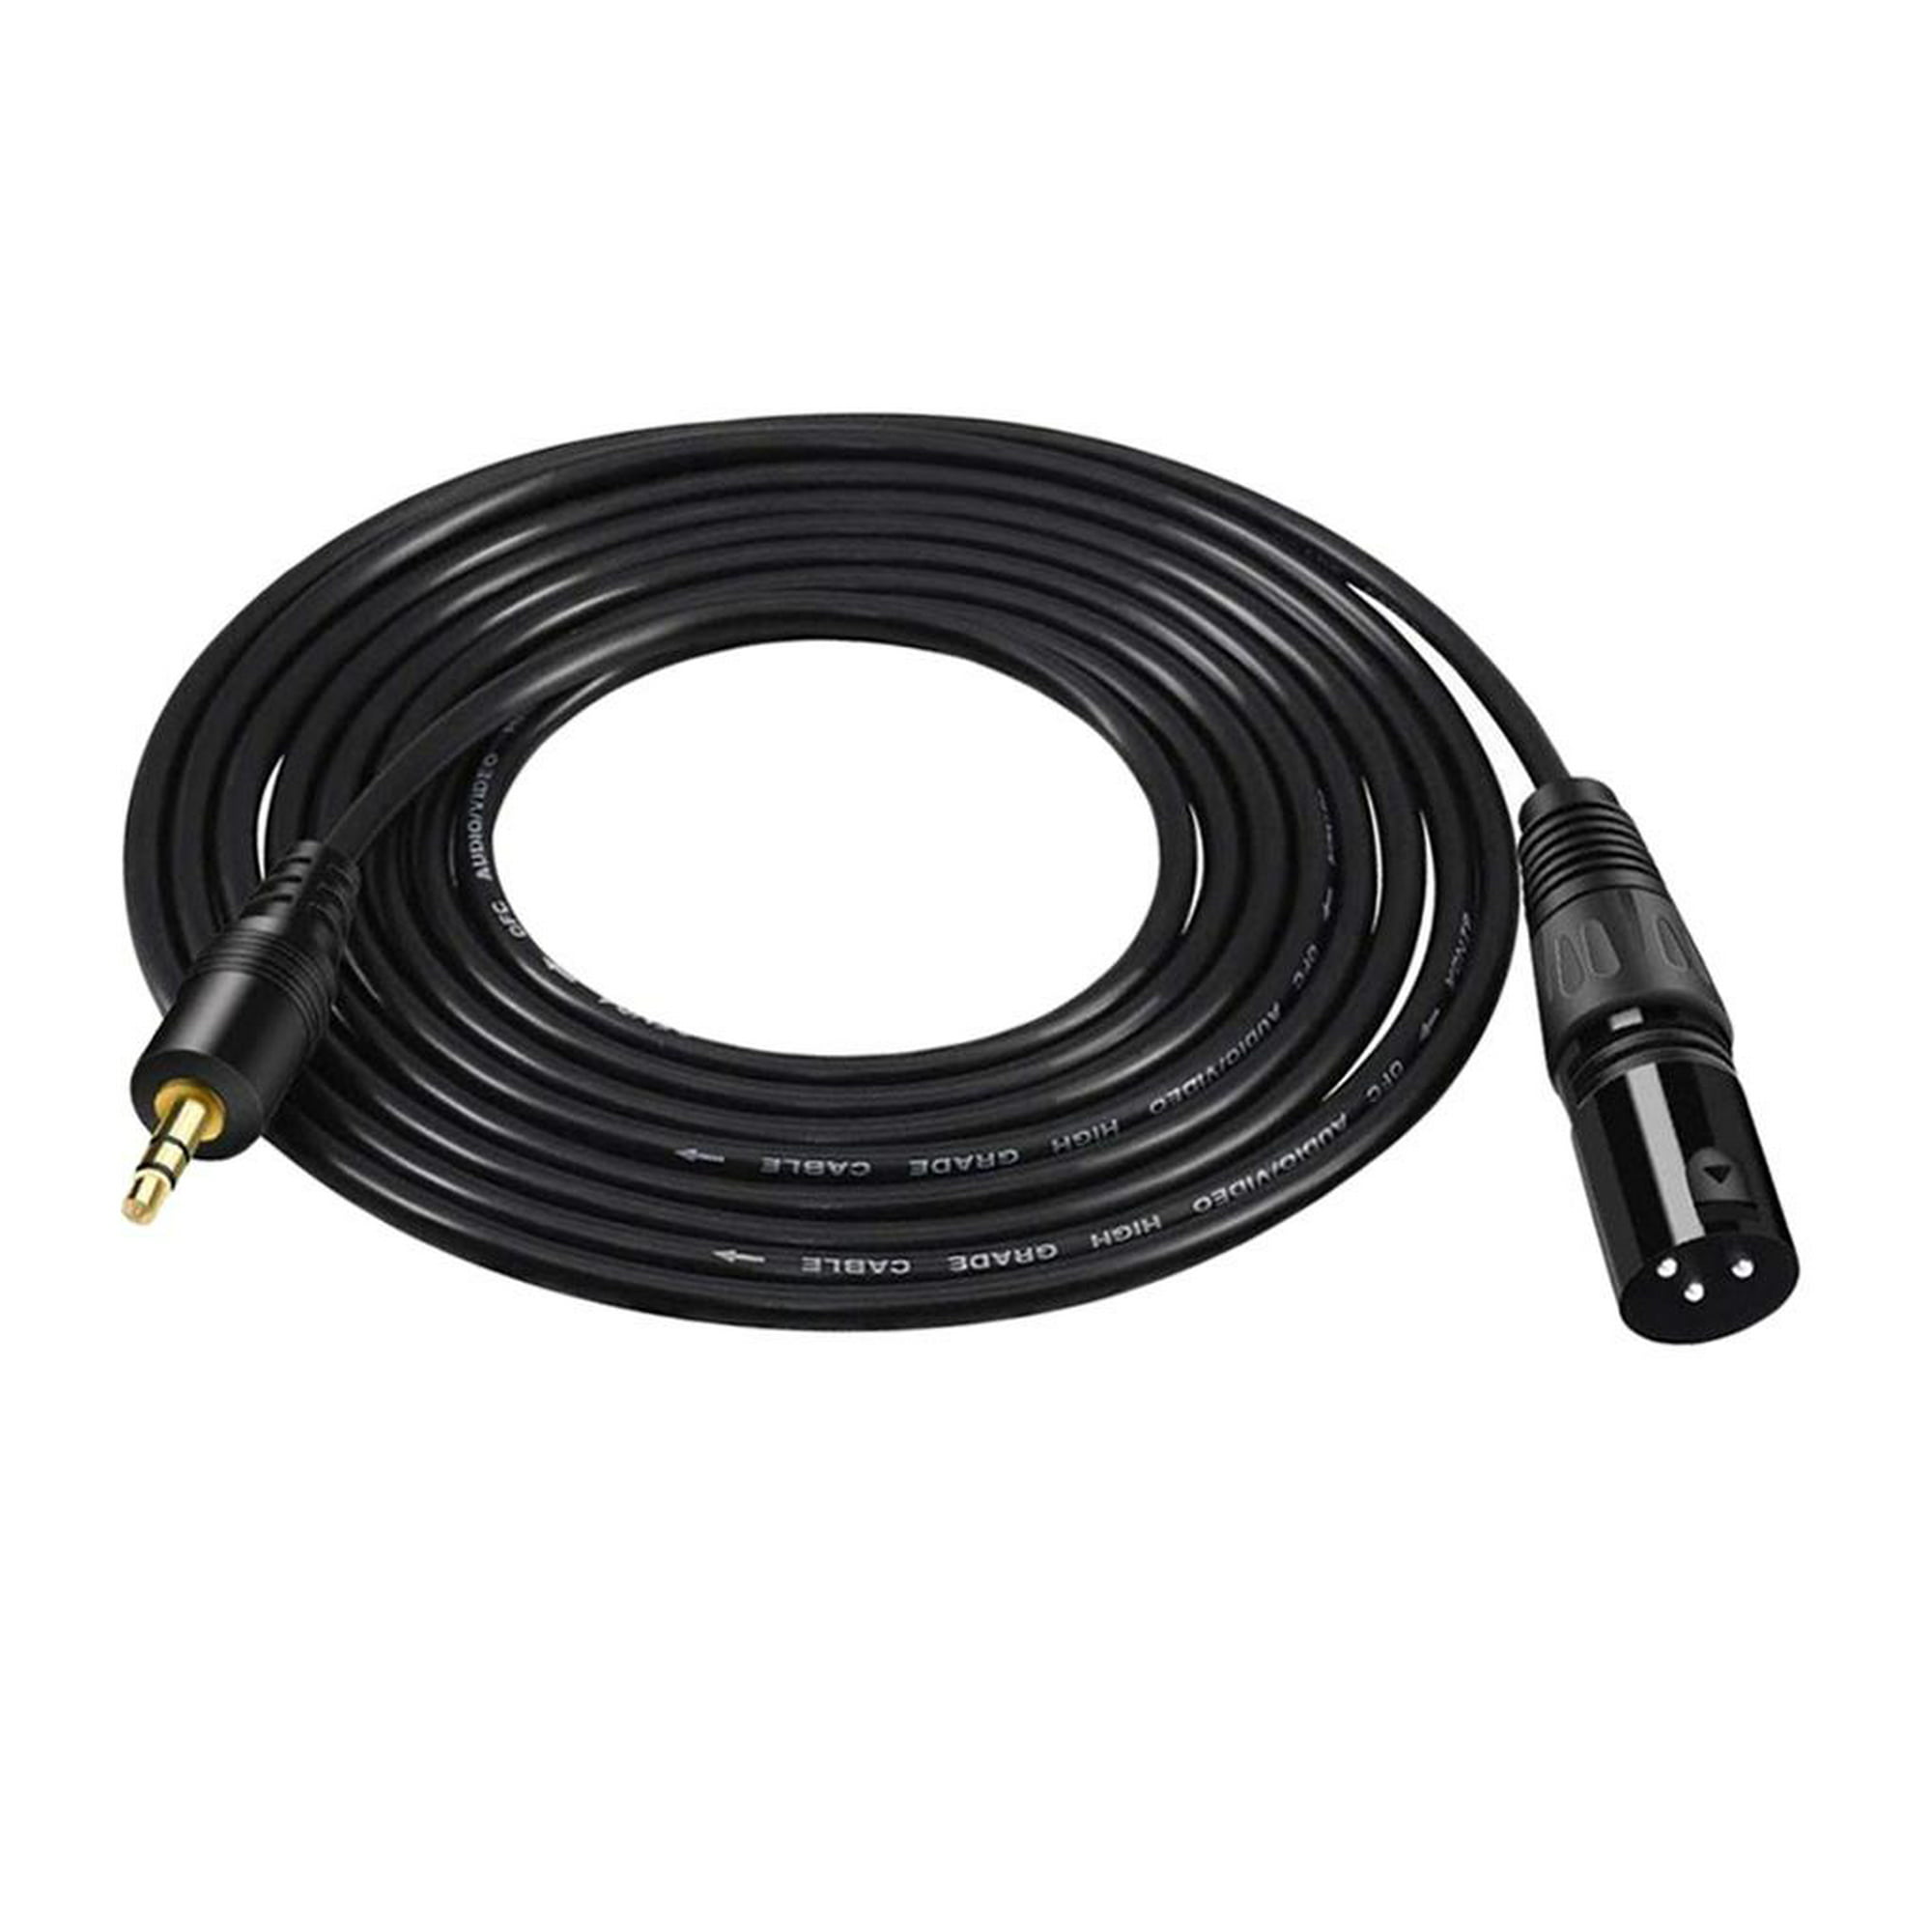 Cable de sonido de 3,5 mm estéreo auxiliar a Cable auxiliar compatible para  teléfono, teléfonos inteligentes, tabletas, reproductores multi 1 m Gloria  cable de extensión de audio